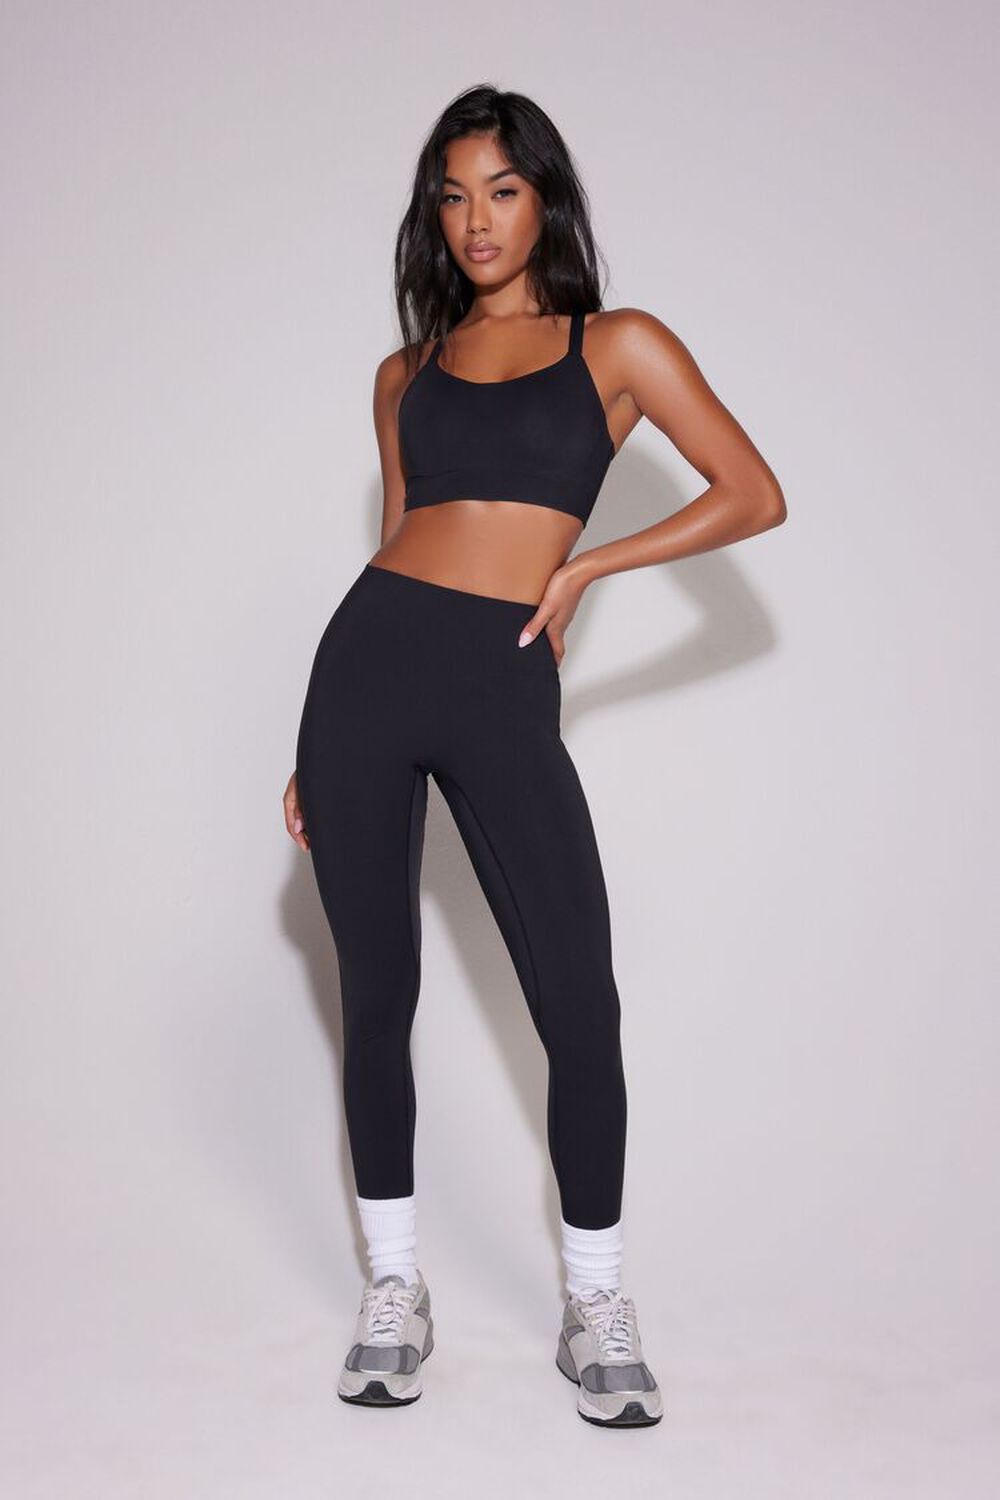 Buttery Soft Gym Set Women Yoga Pants Sets 2 Piece Crisscross Crop Top and  High Waist Leggings Sports Suits Workout Clothes